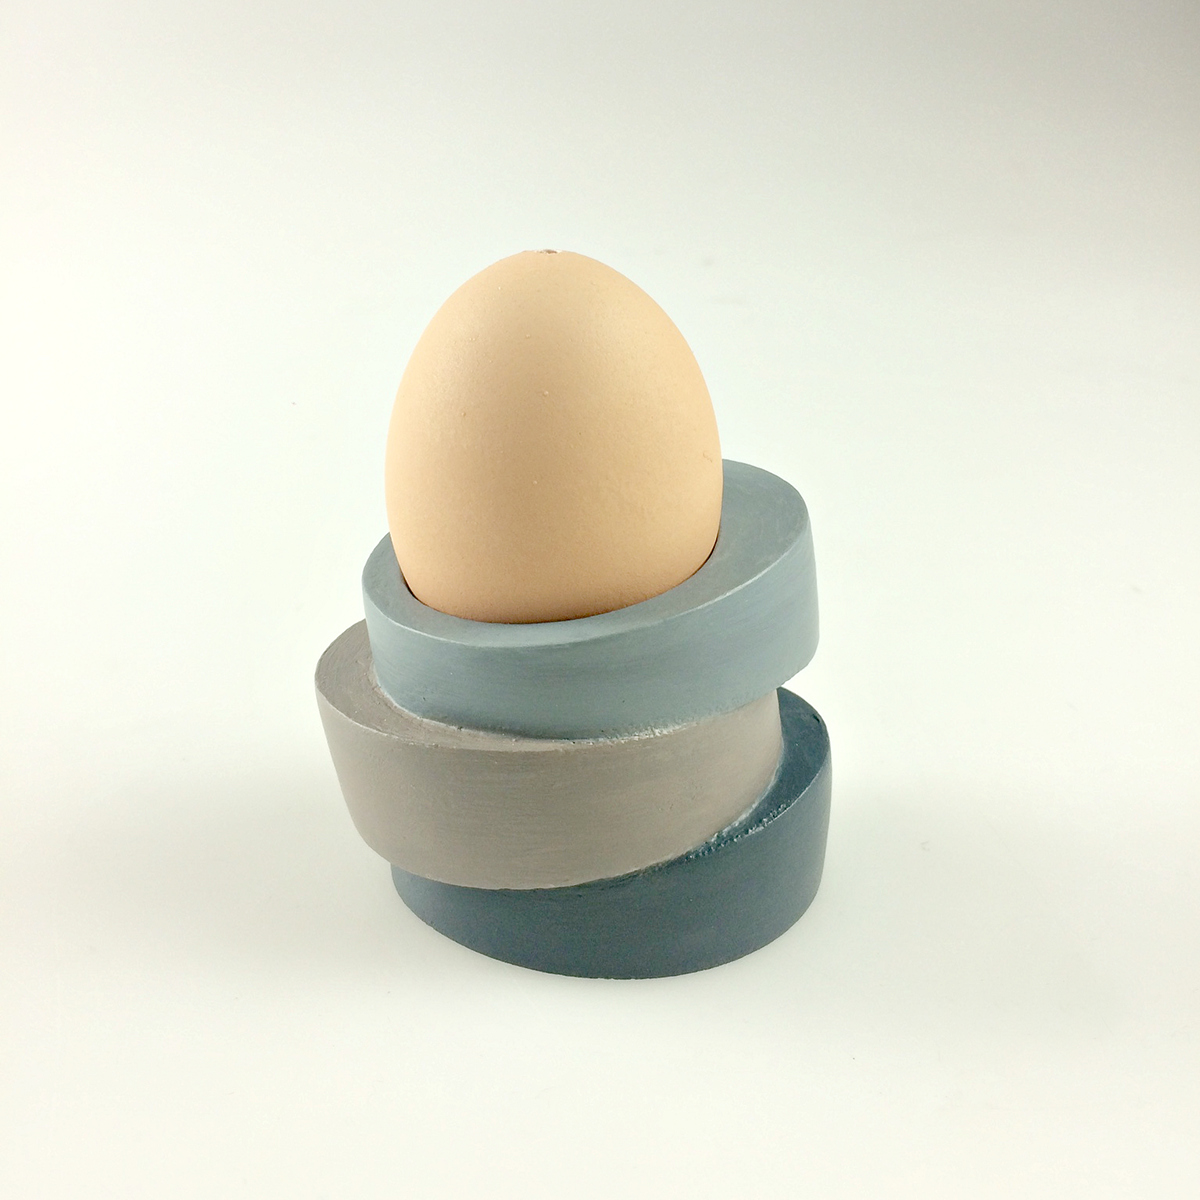 egg cup holder stones organic stacking balance zen natural Foam model